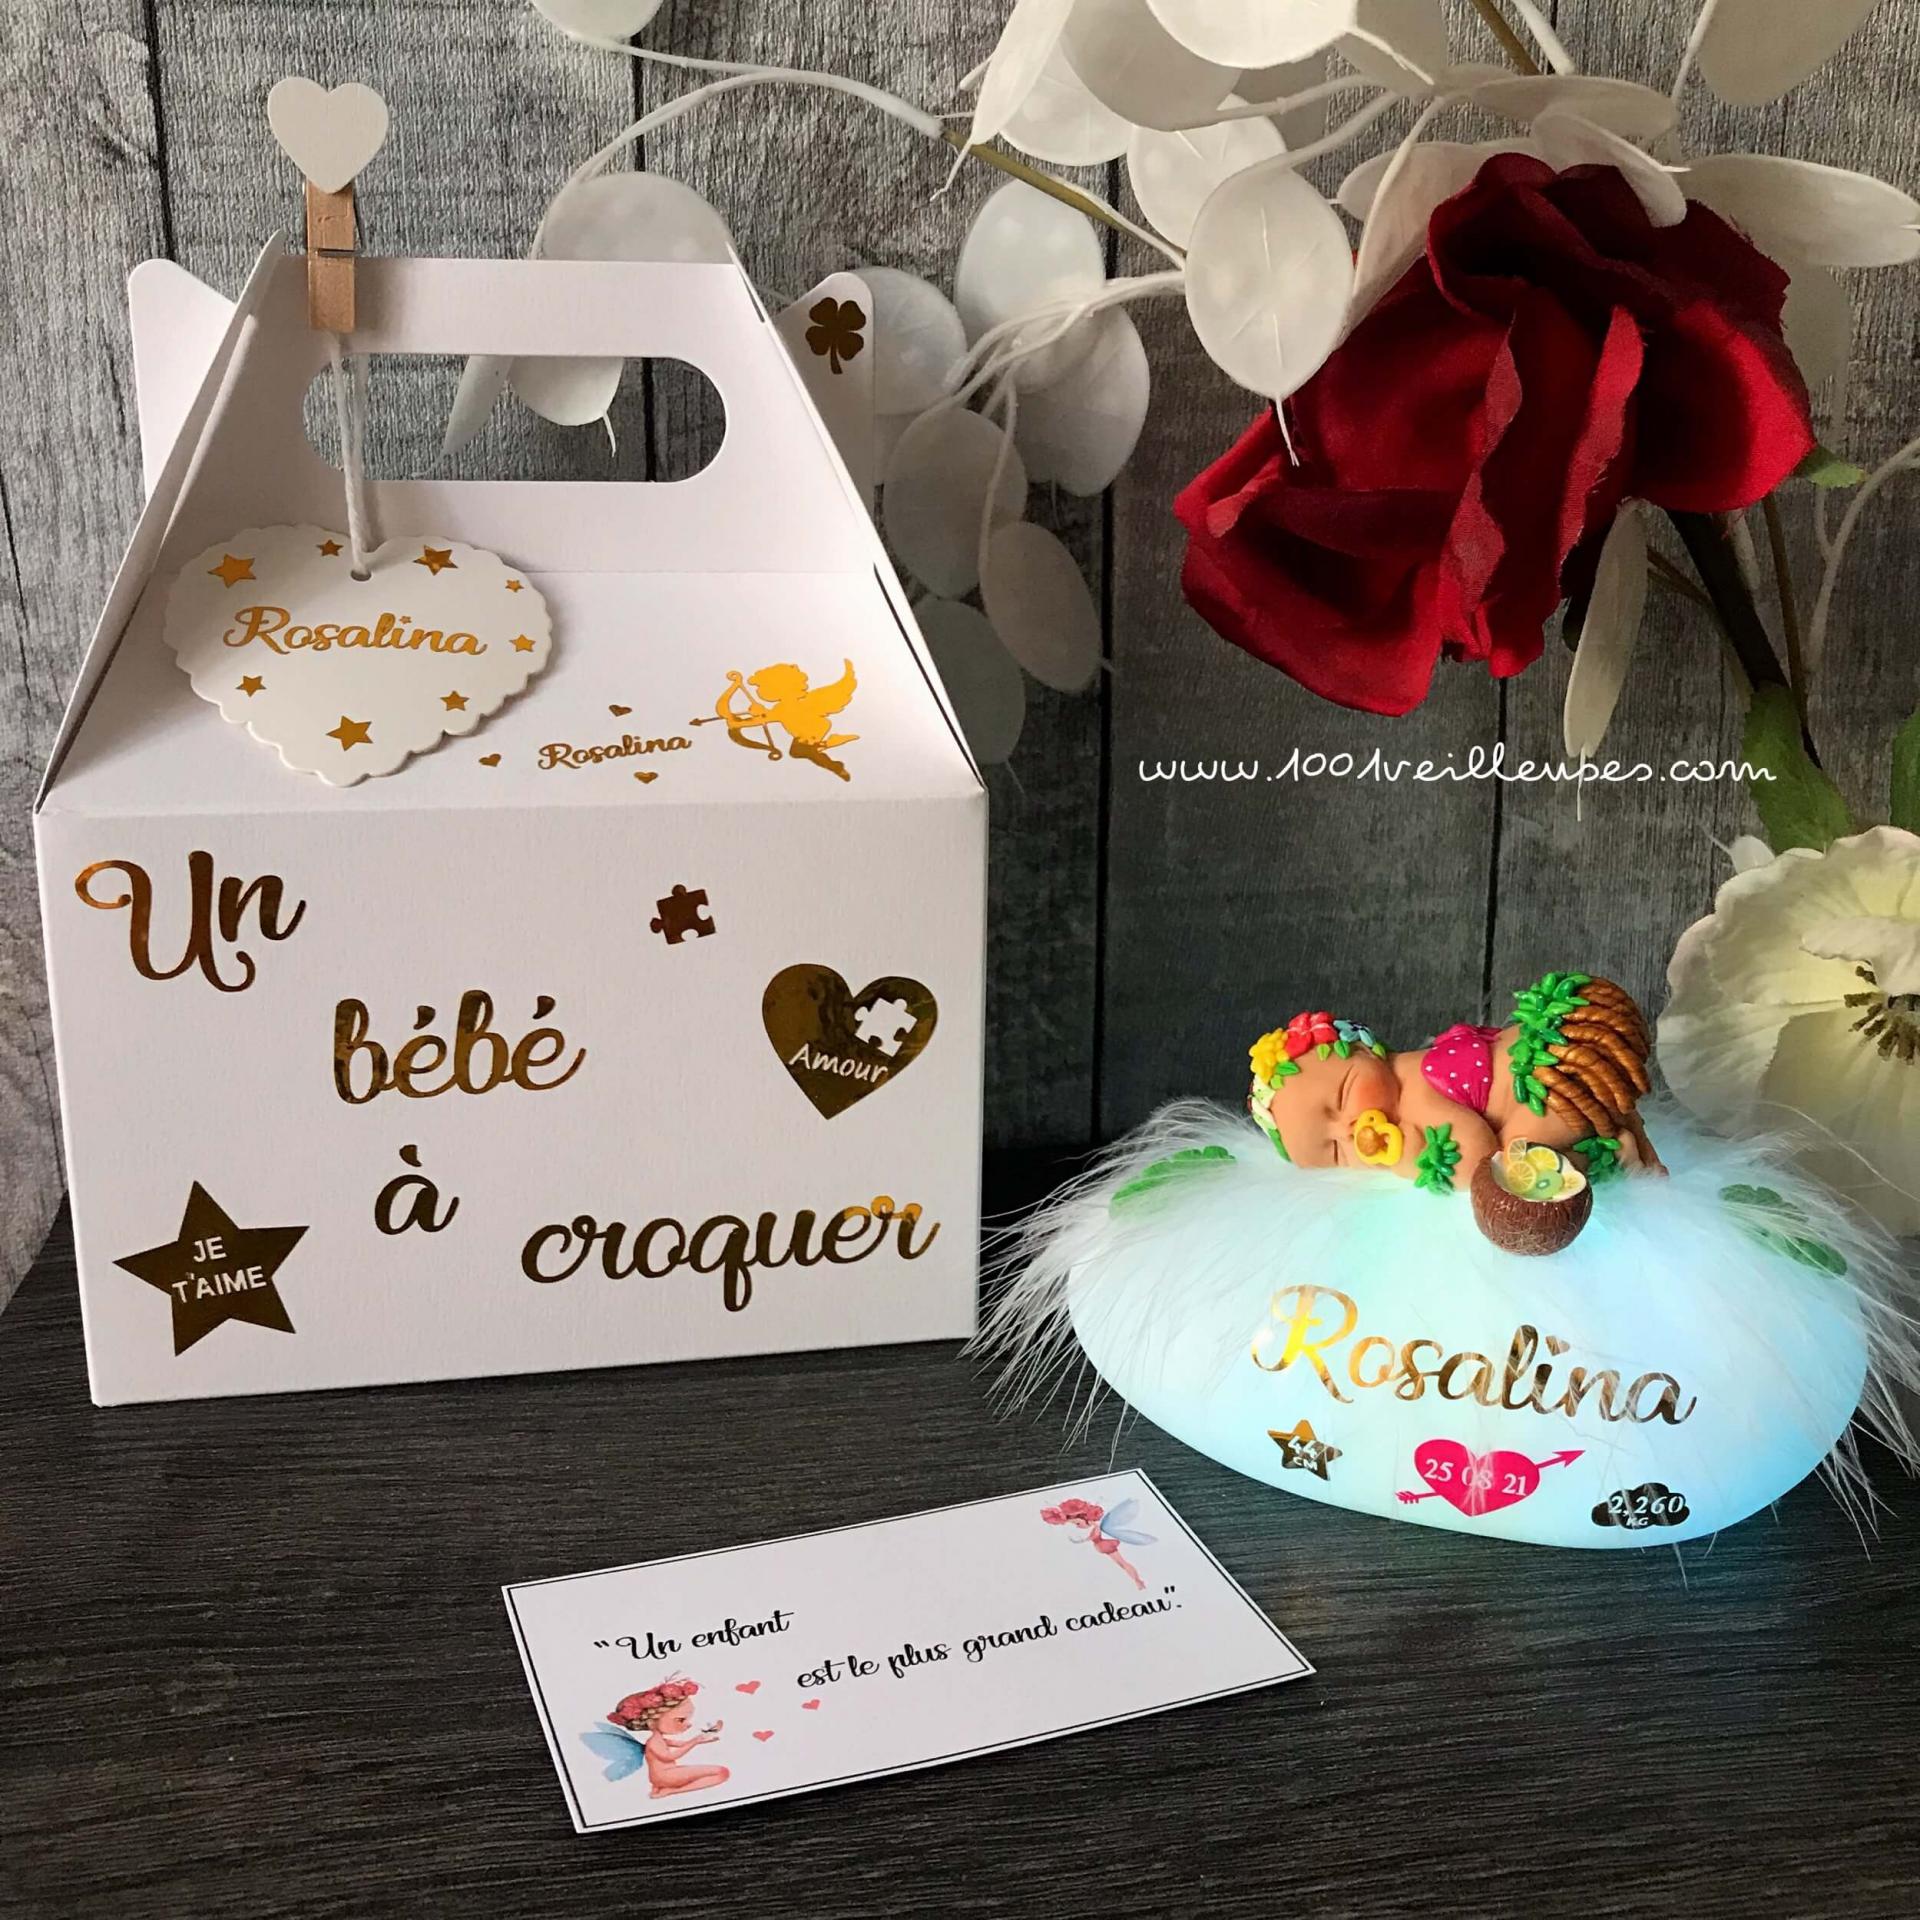 Baby girl night light - personalized ideal birth gift - beautiful handmade creation - customizable gift box